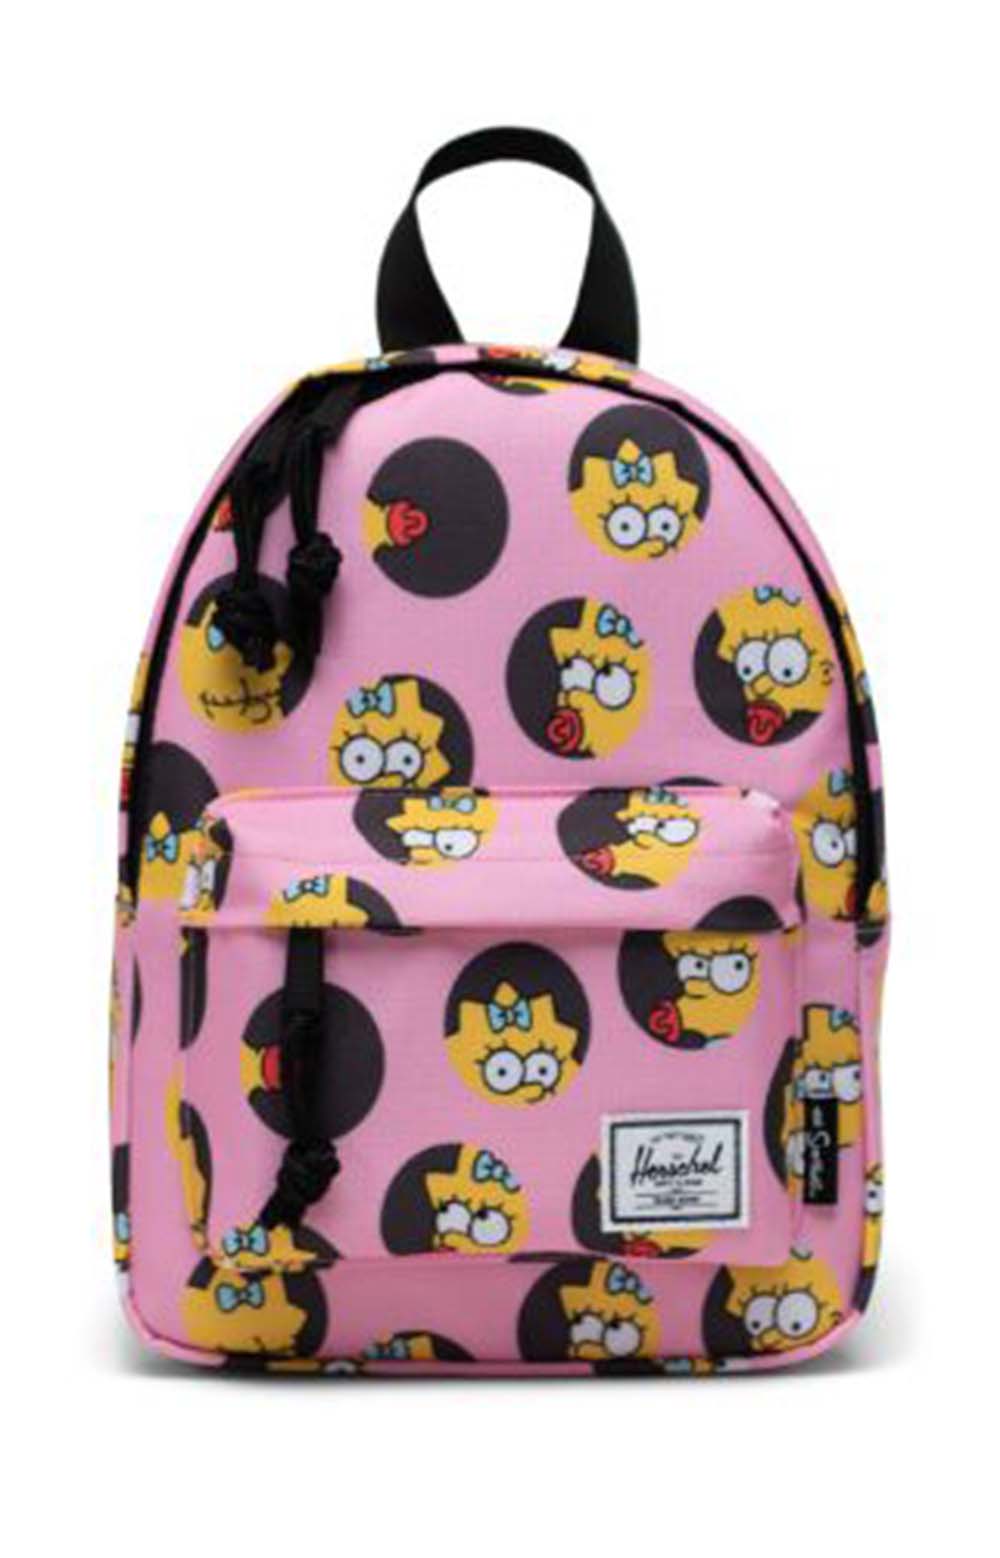 x Simpsons Mini Classic Backpack - Maggie Simpson